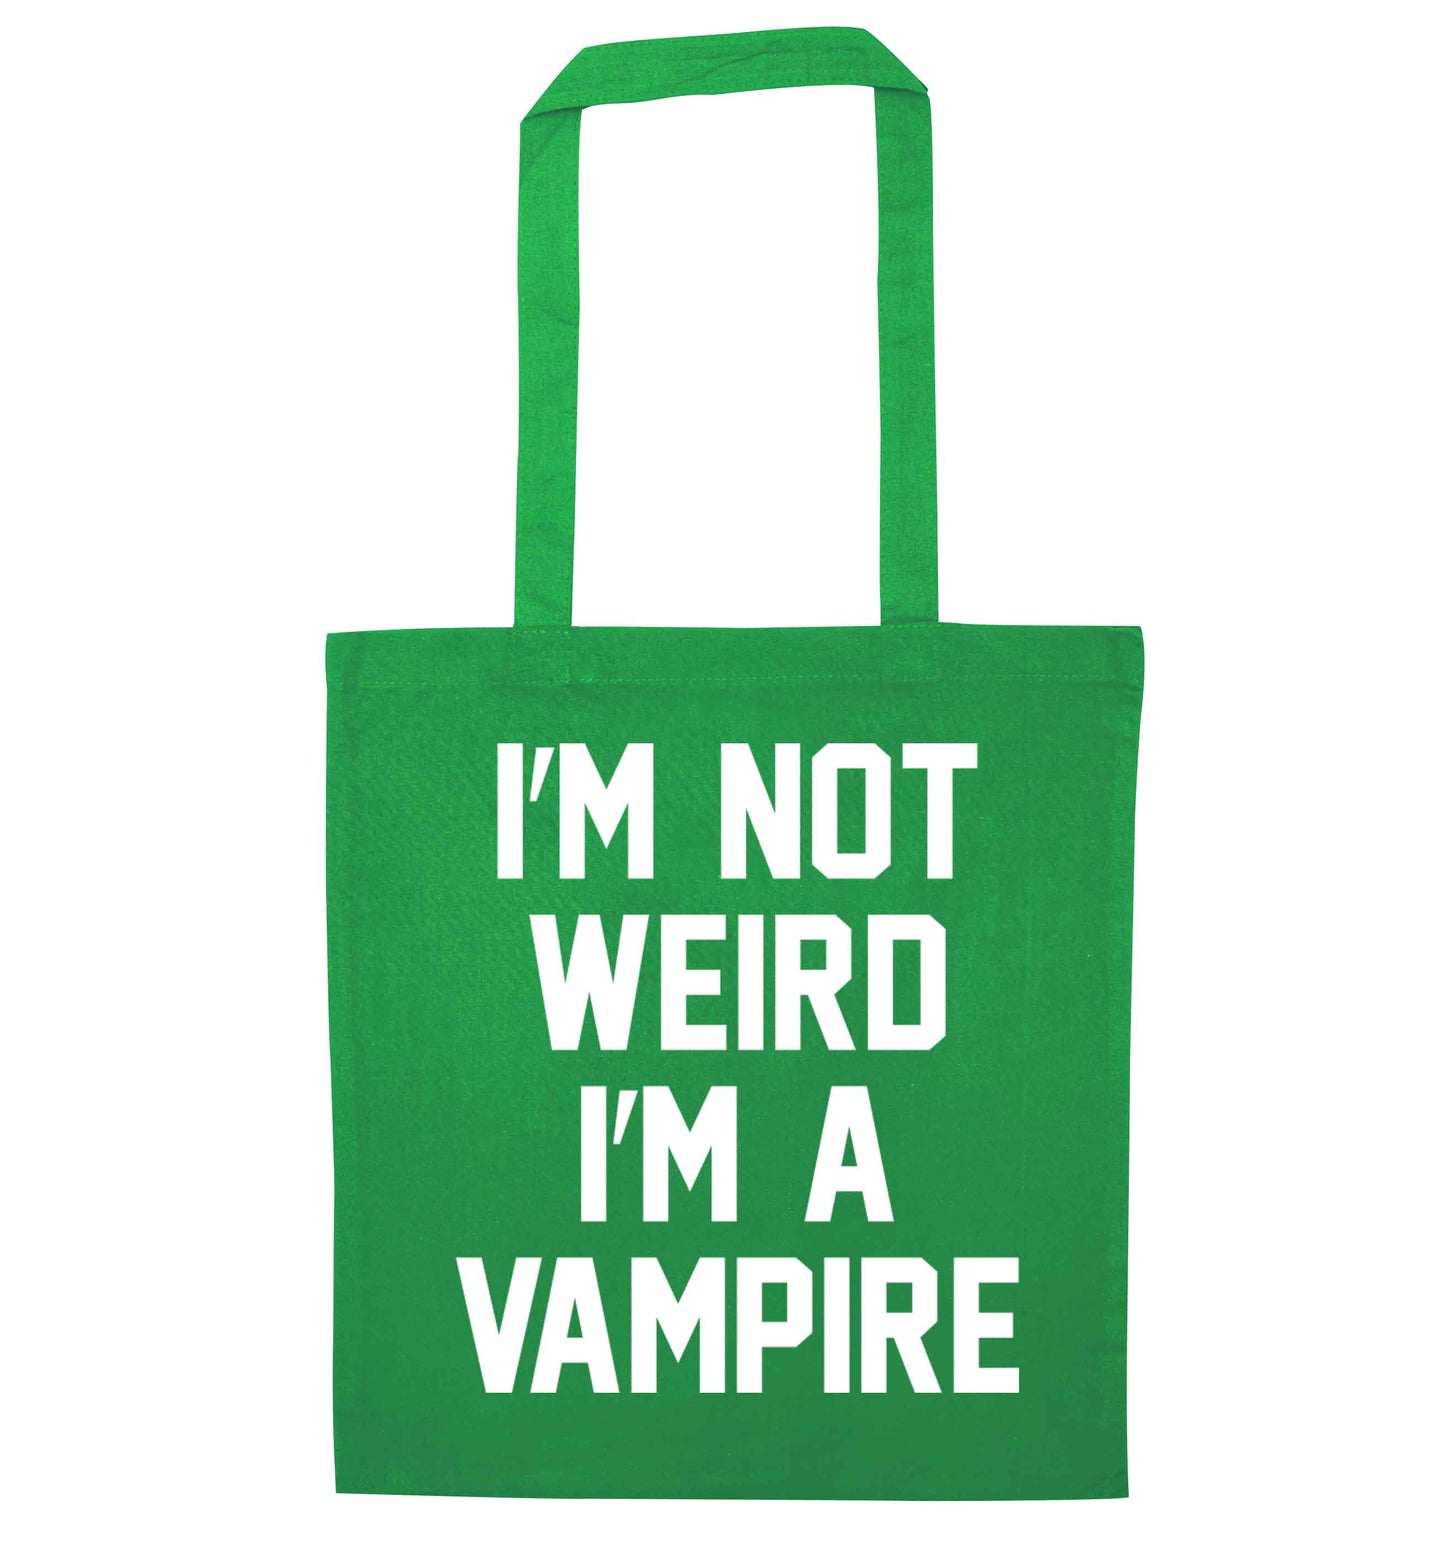 I'm not weird I'm a vampire green tote bag